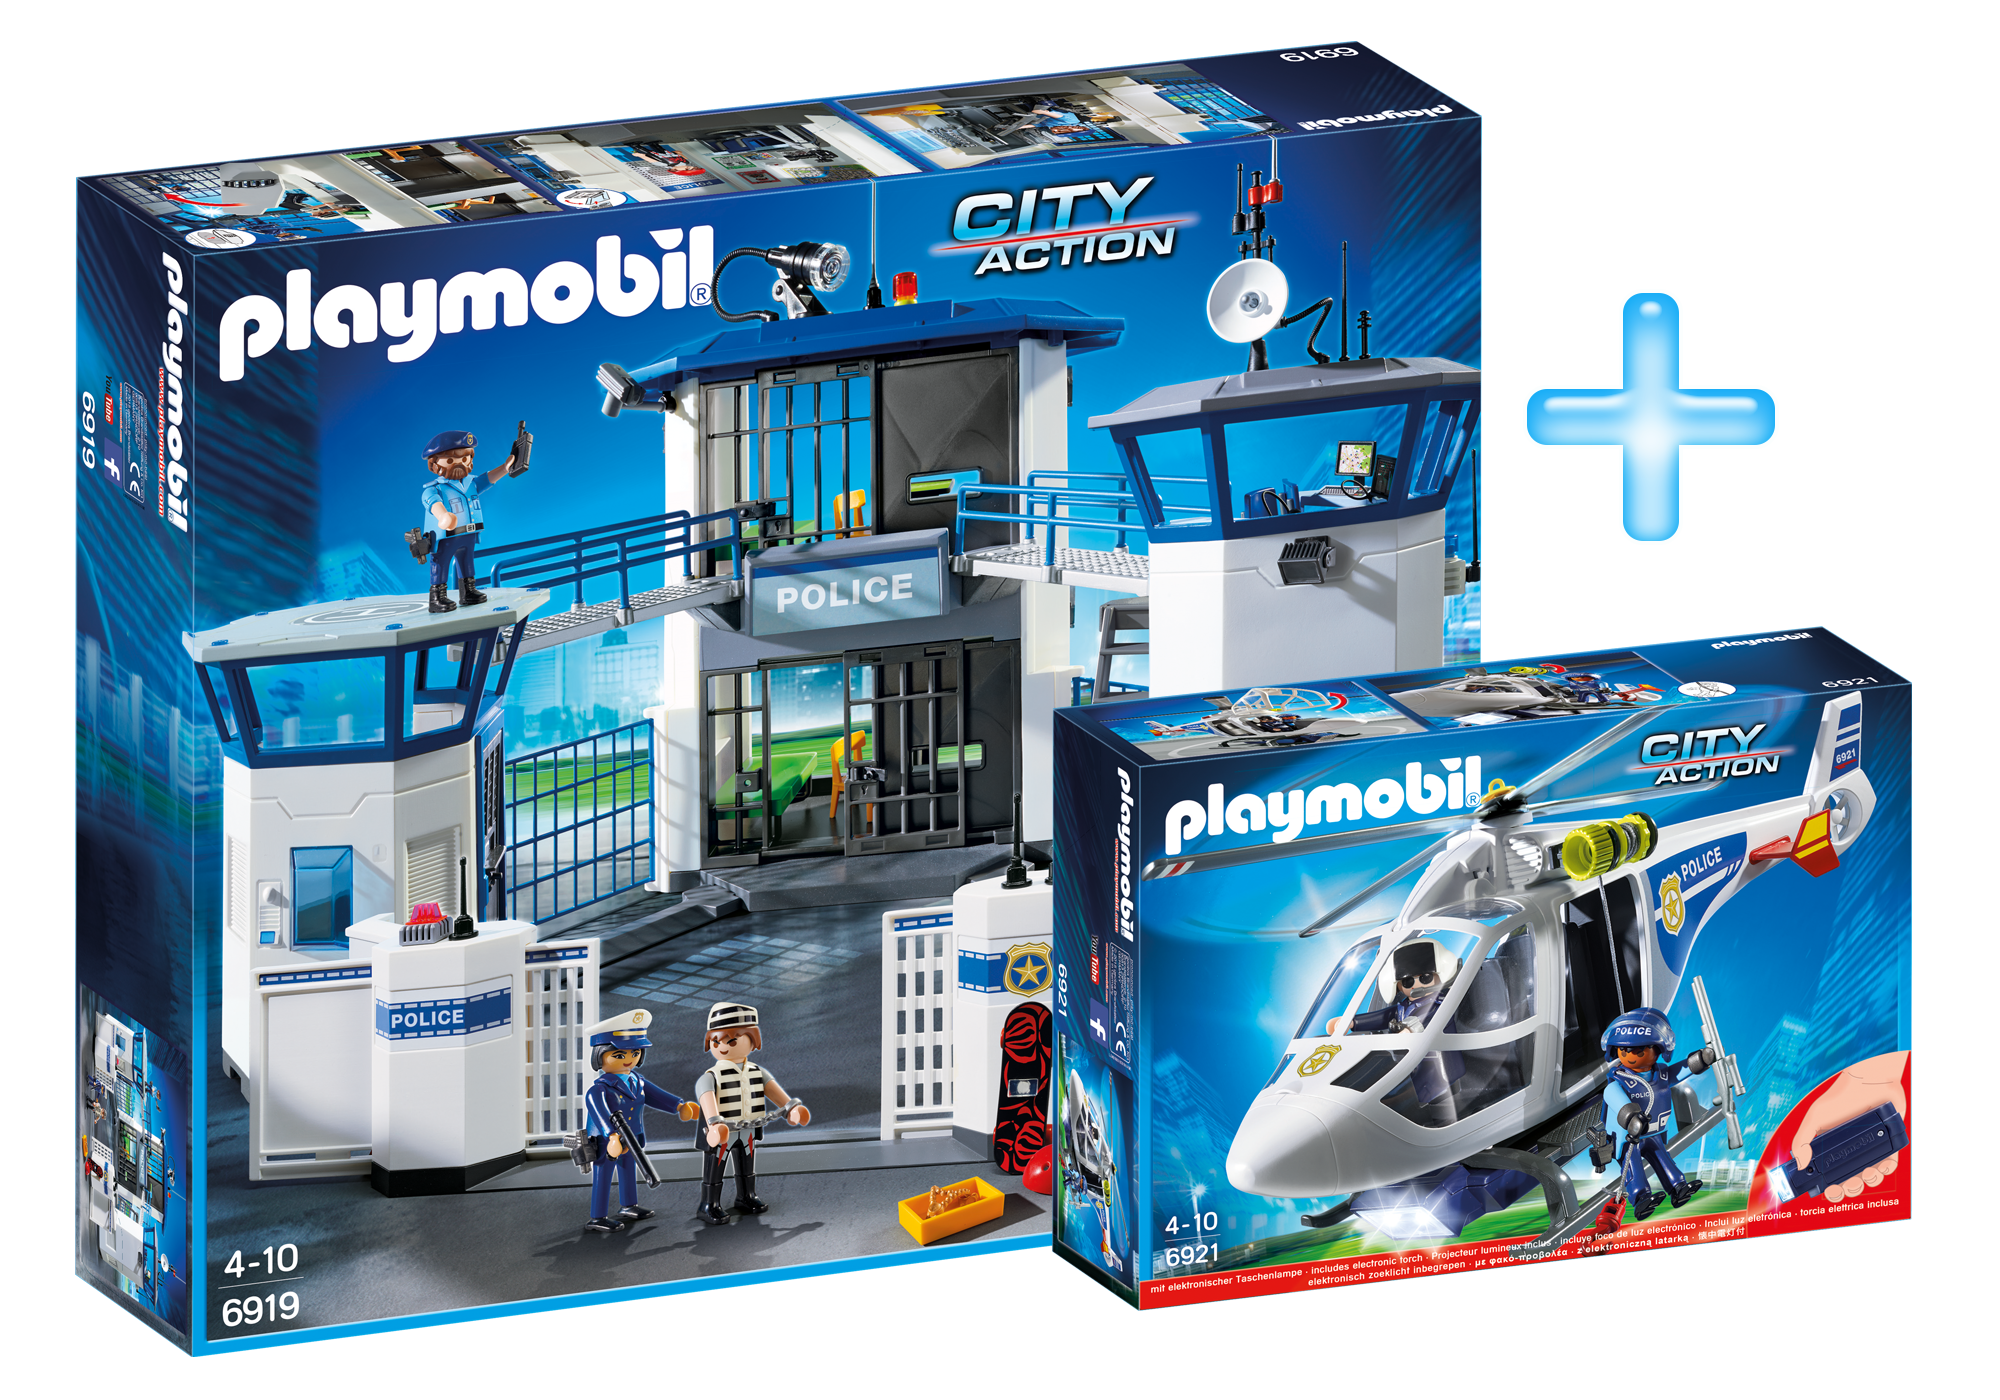 Playmobil Police Station Sale Online, 59% OFF | www.gruposincom.es